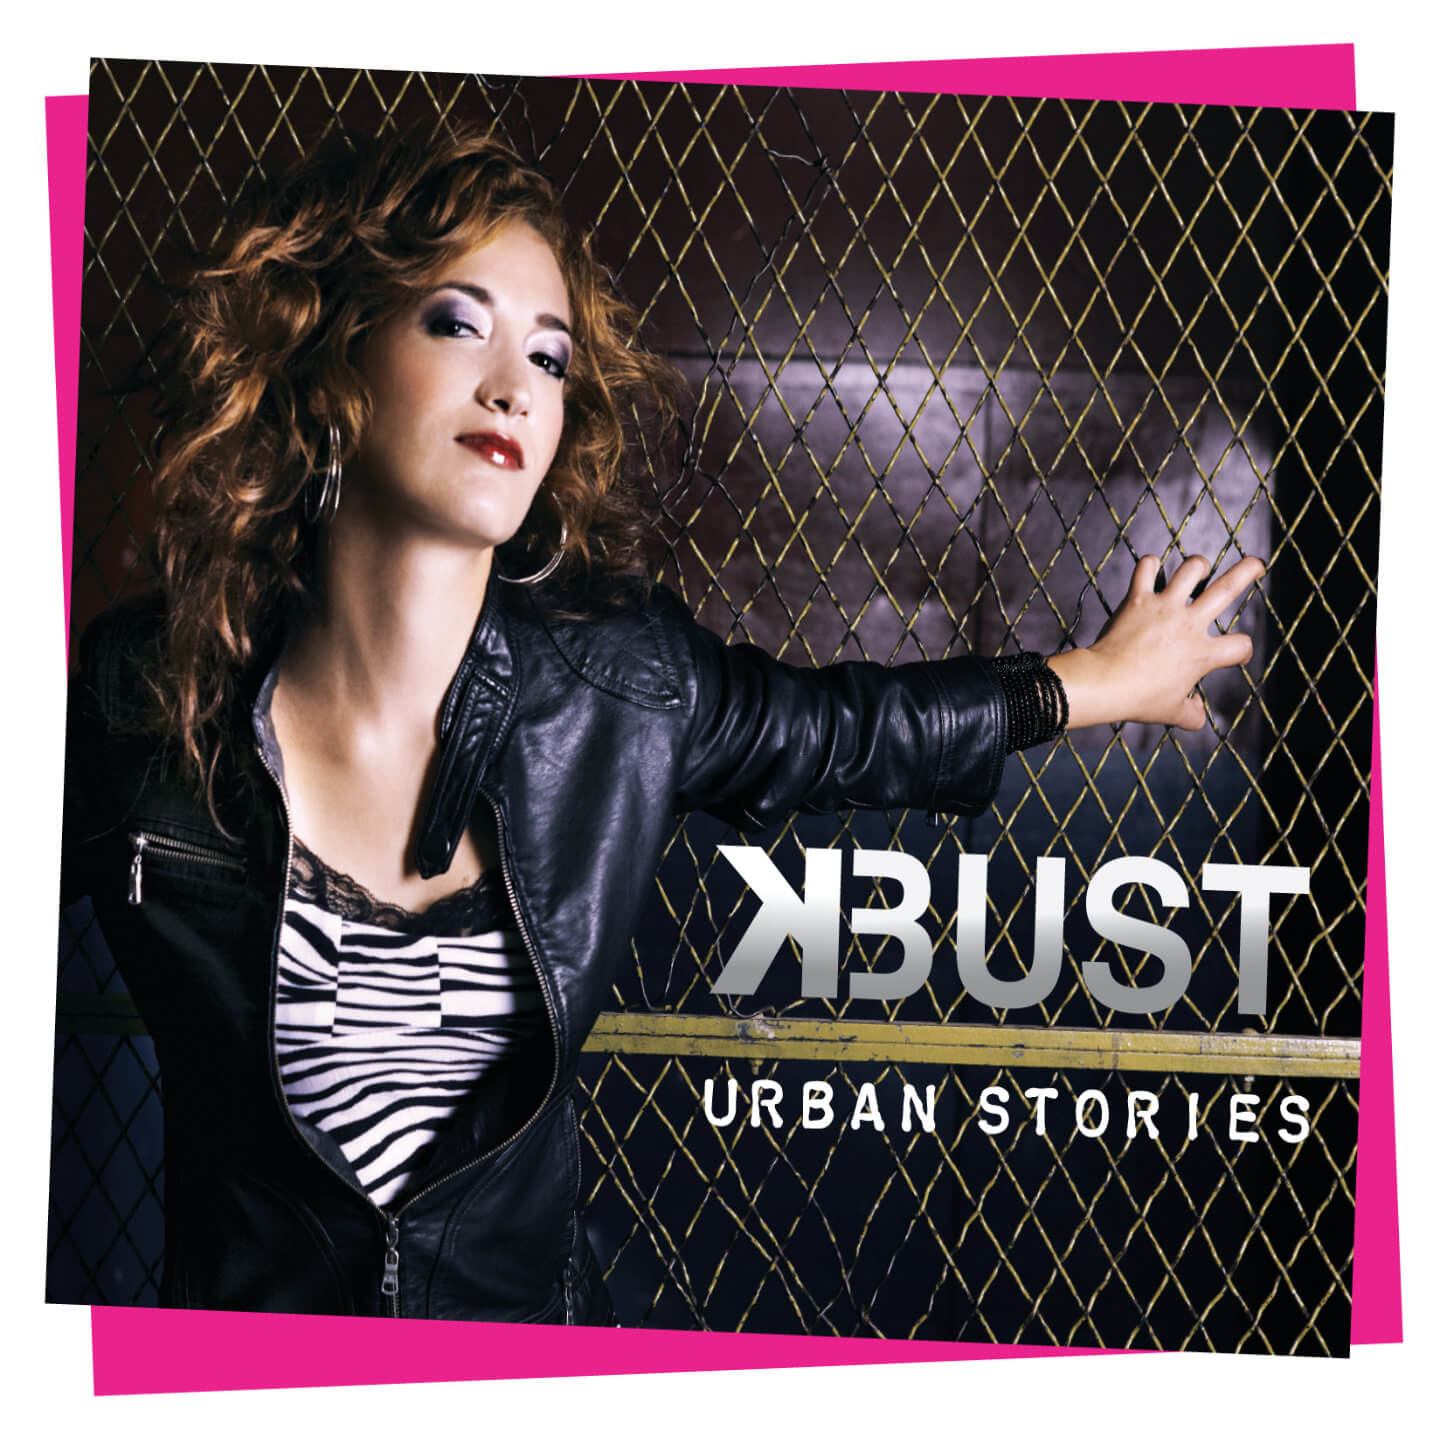 K-Bust Urban Stories